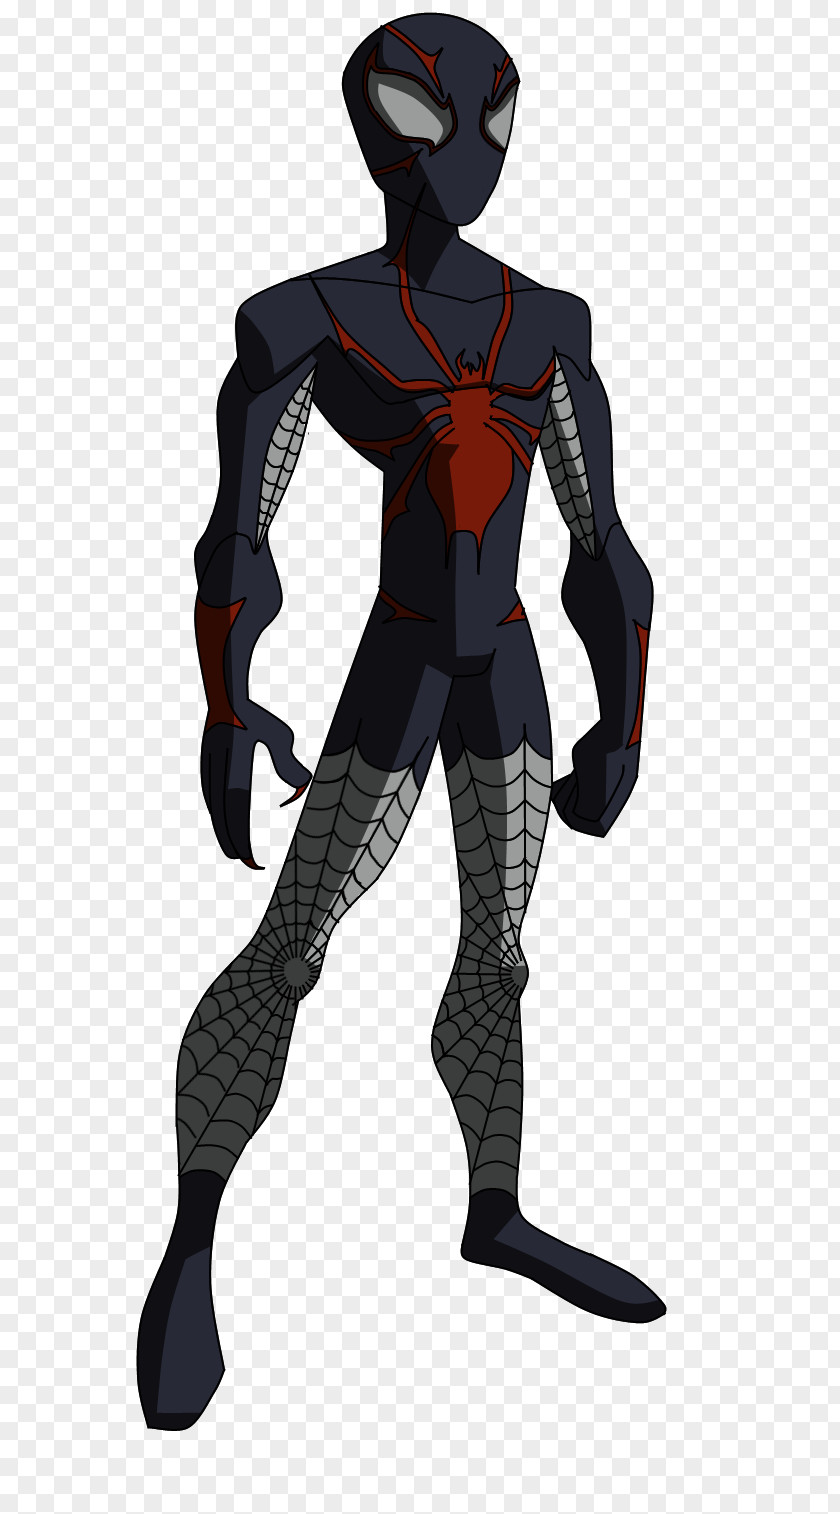 Spider-man Spider-Man Venom Felicia Hardy Electro Sandman PNG